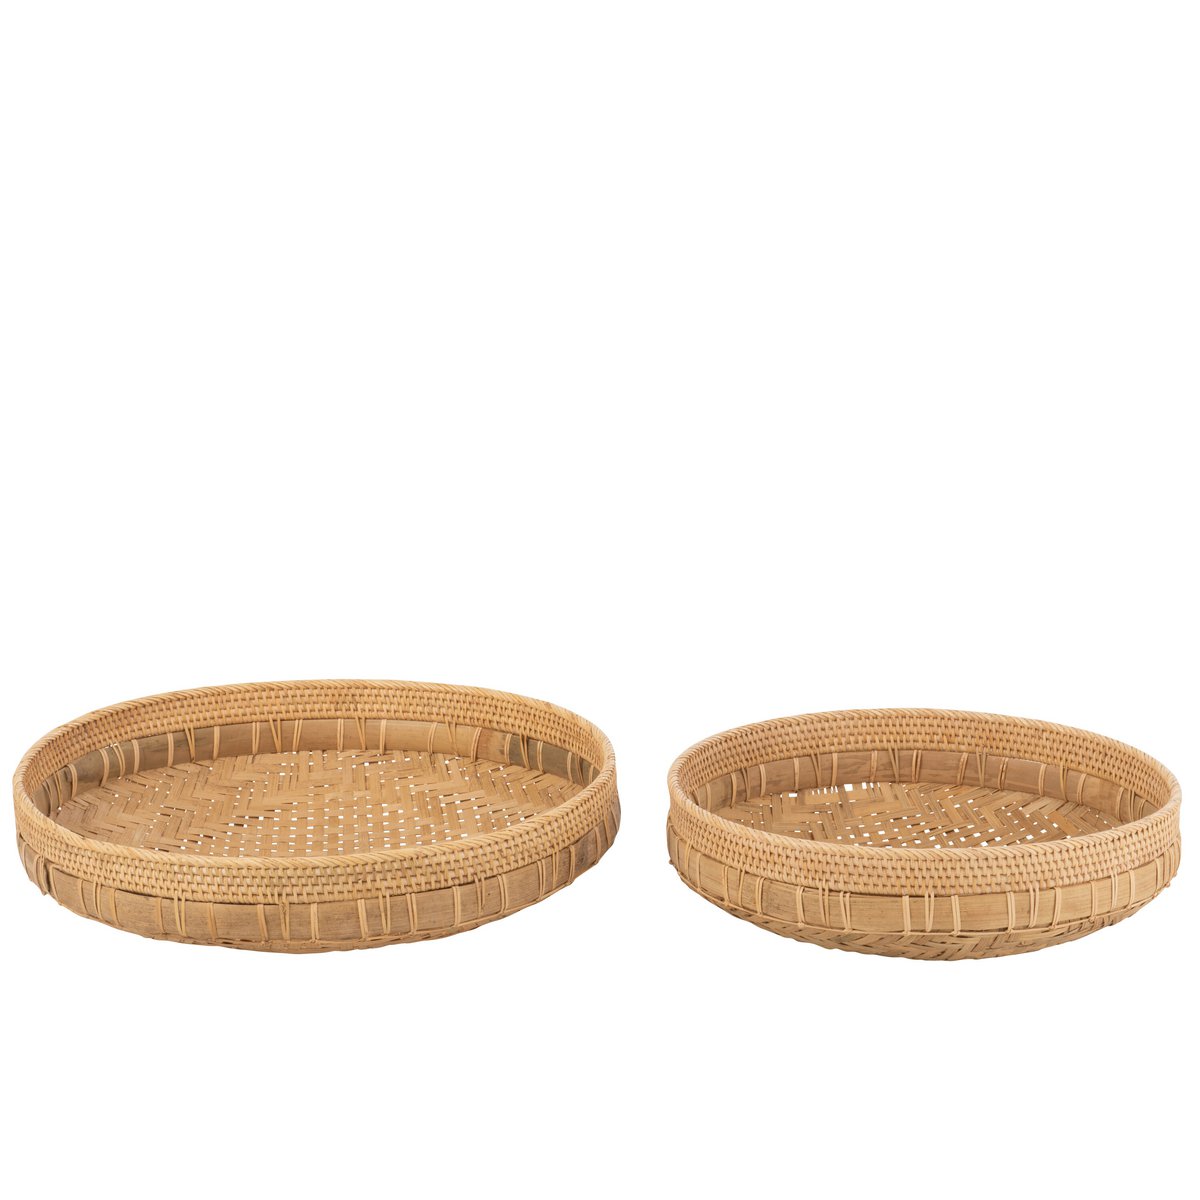 Set of 2 rattan bowls, natural - round